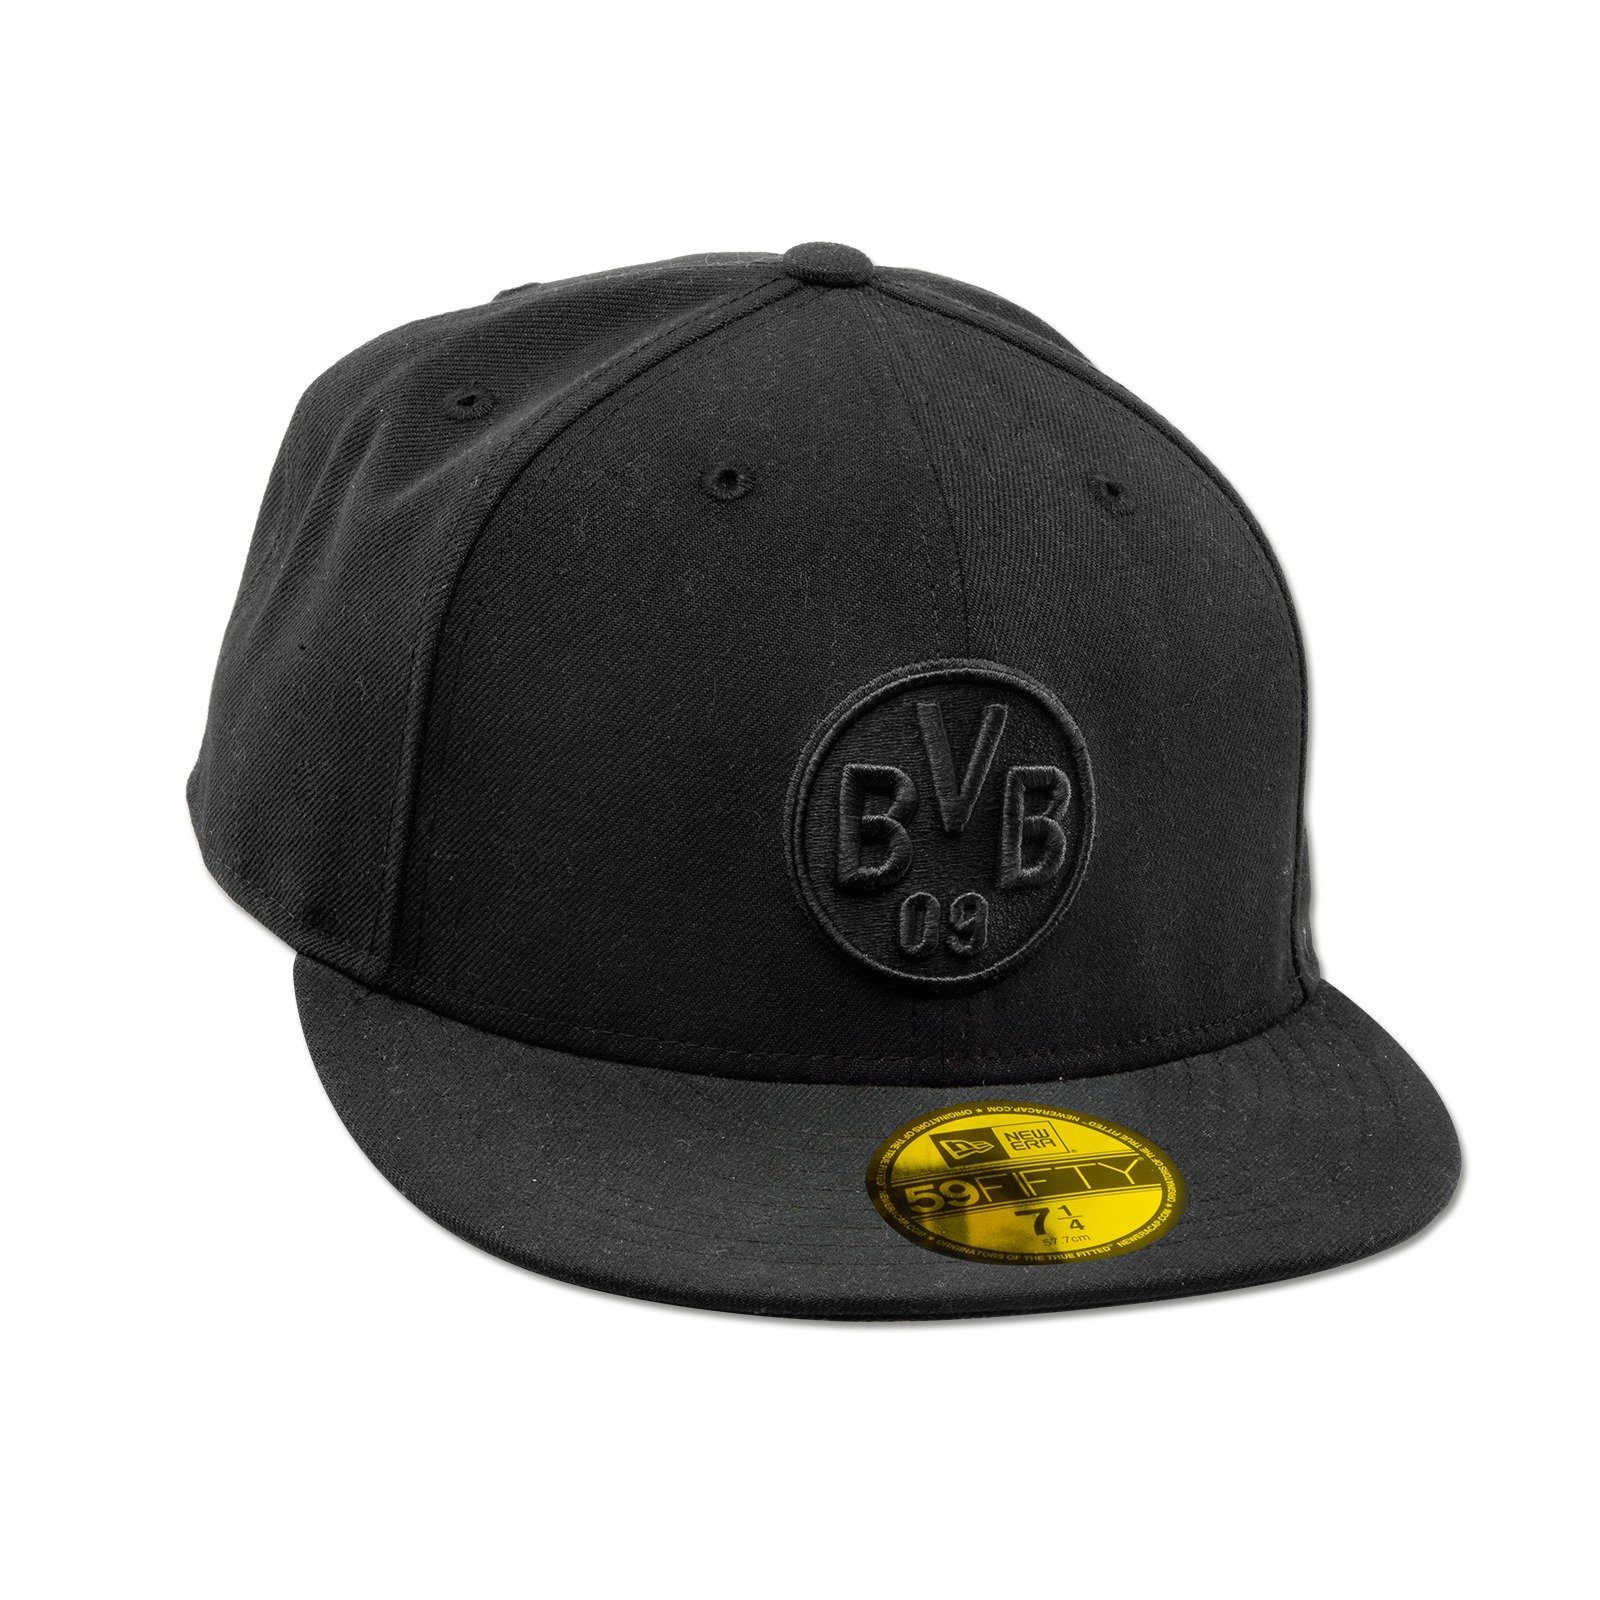 New Era Baseball Cap »New Era BVB Borussia Dortmund Snapback Cap 59FIFTY«